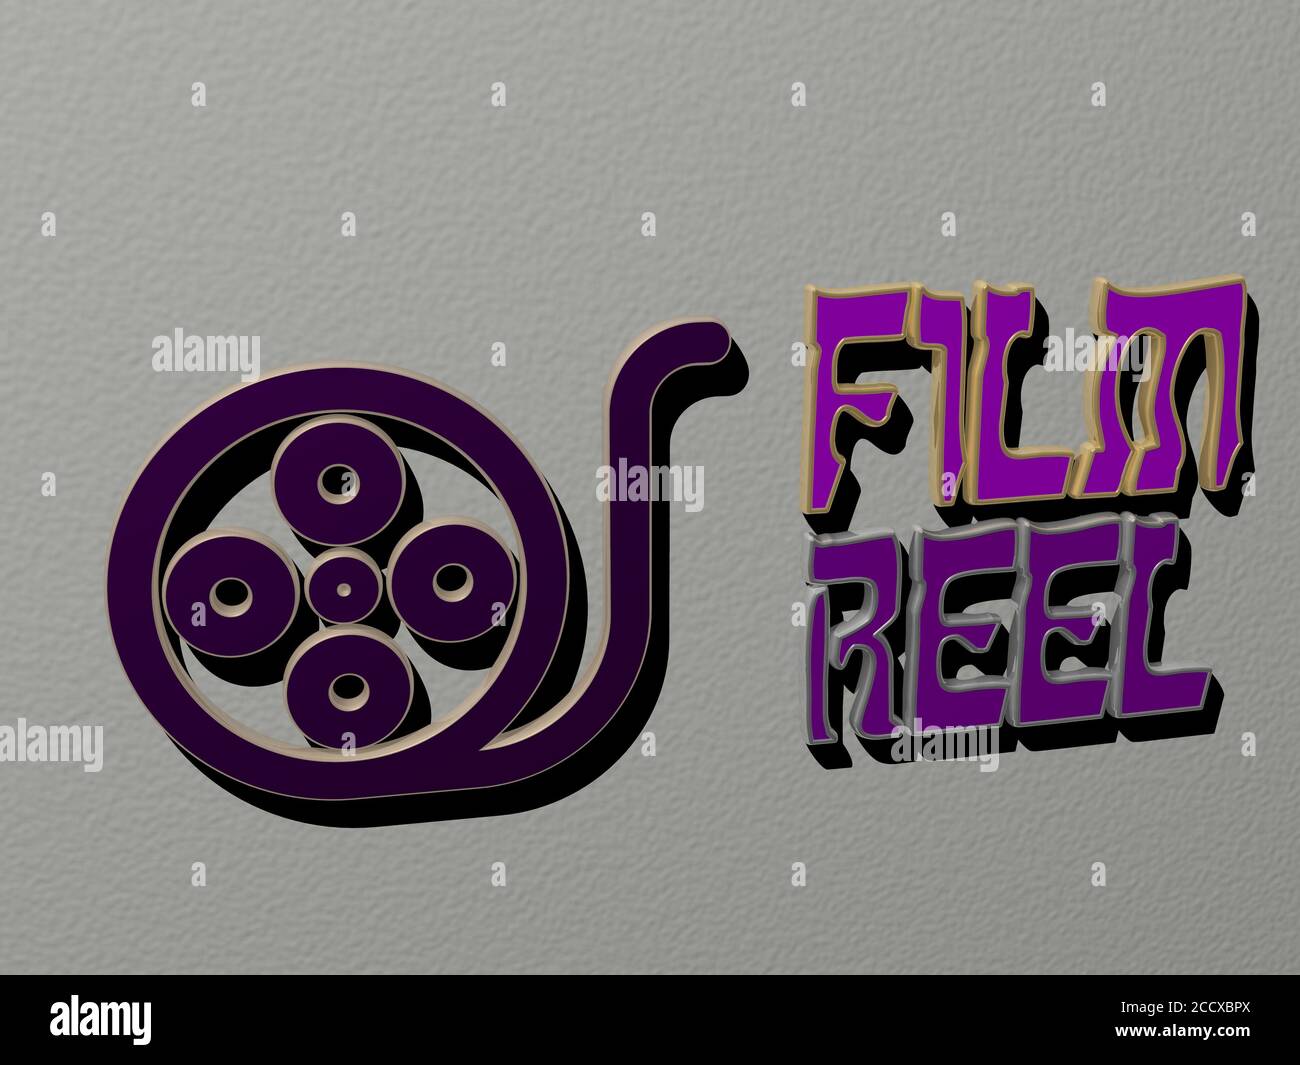 FILMROLLE Symbol und Text an der Wand, 3D-Illustration Stockfoto